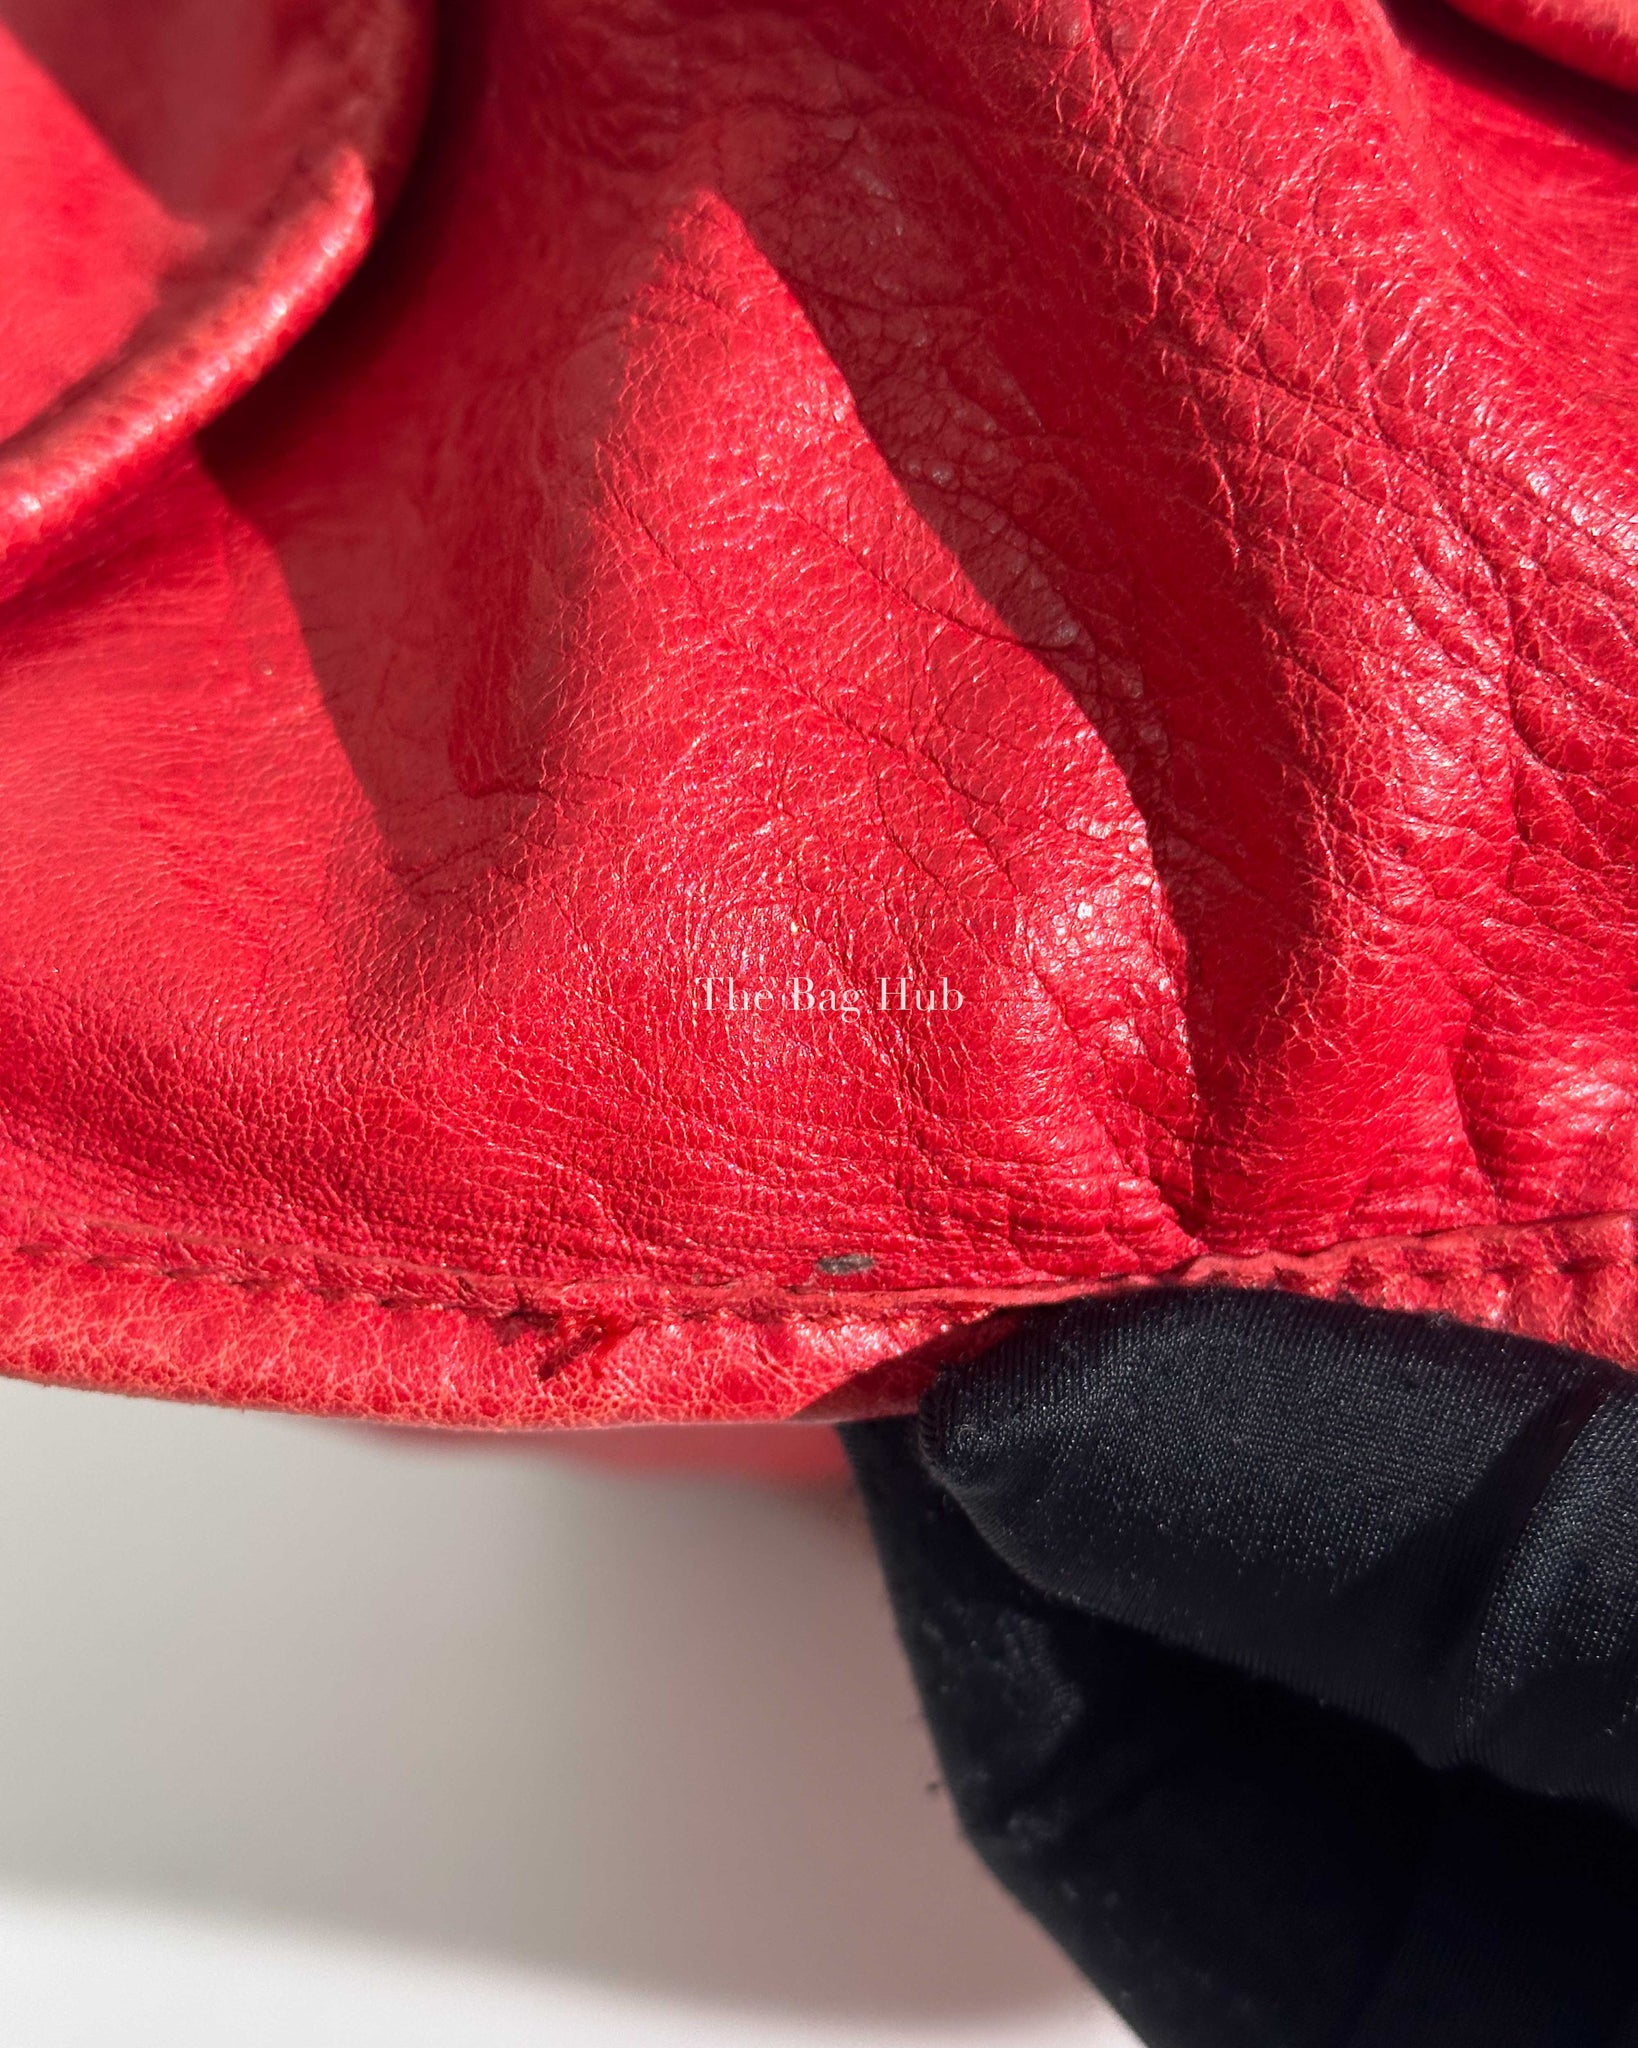 Balenciaga Red Classic Part Time Bag